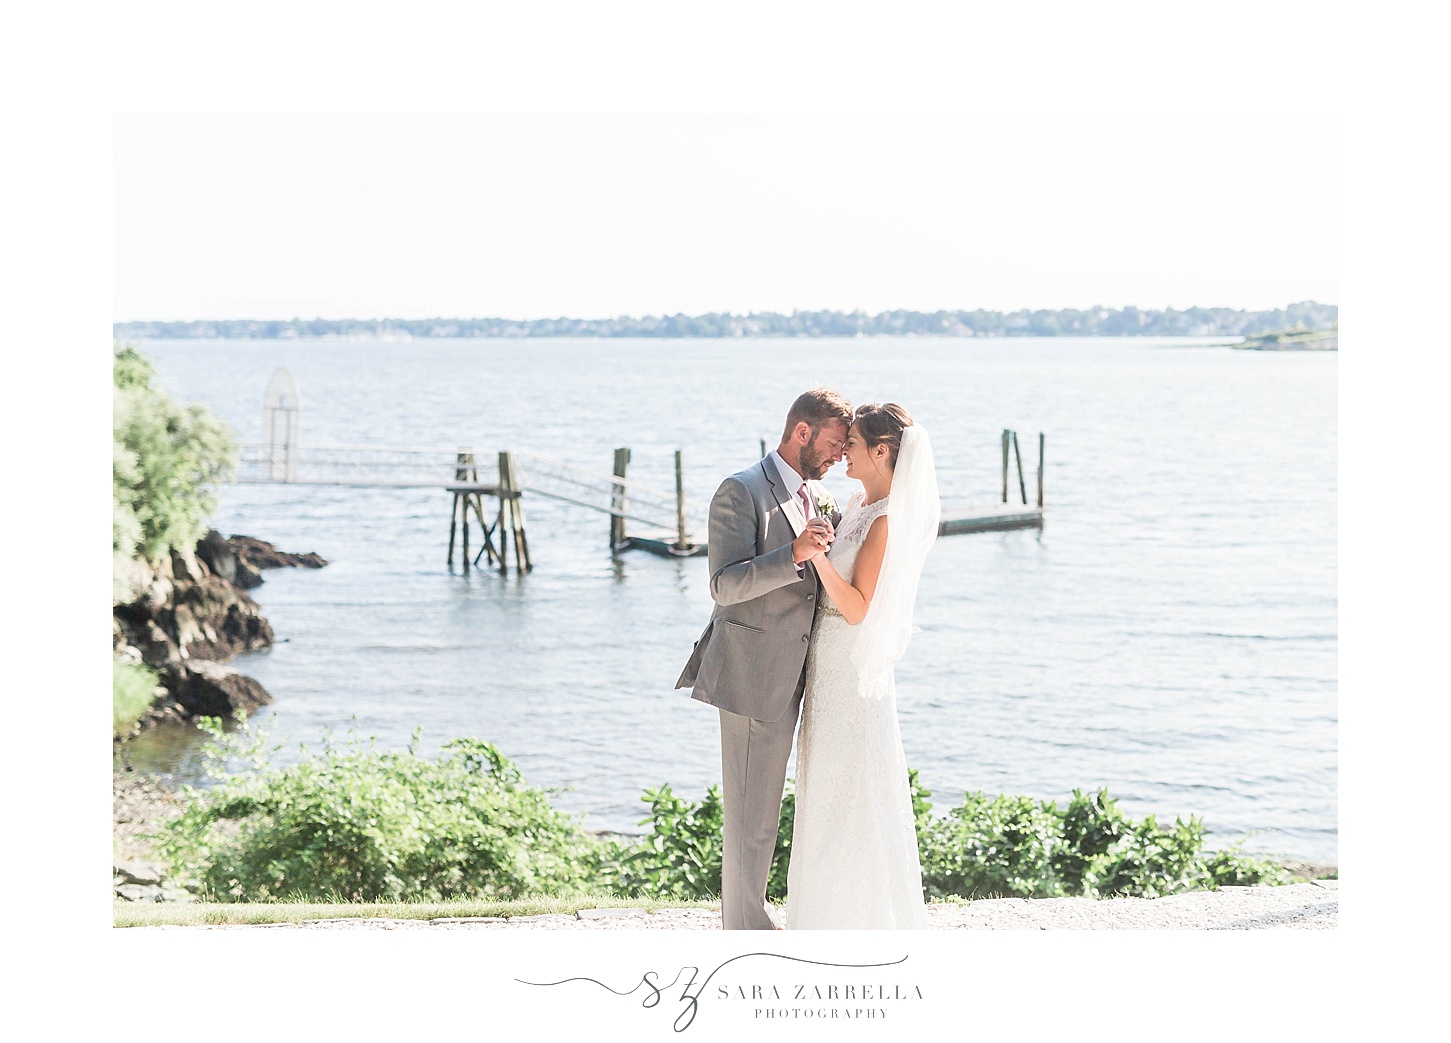 waterfront wedding portraits in Rhode Island with Sara Zarrella Photography